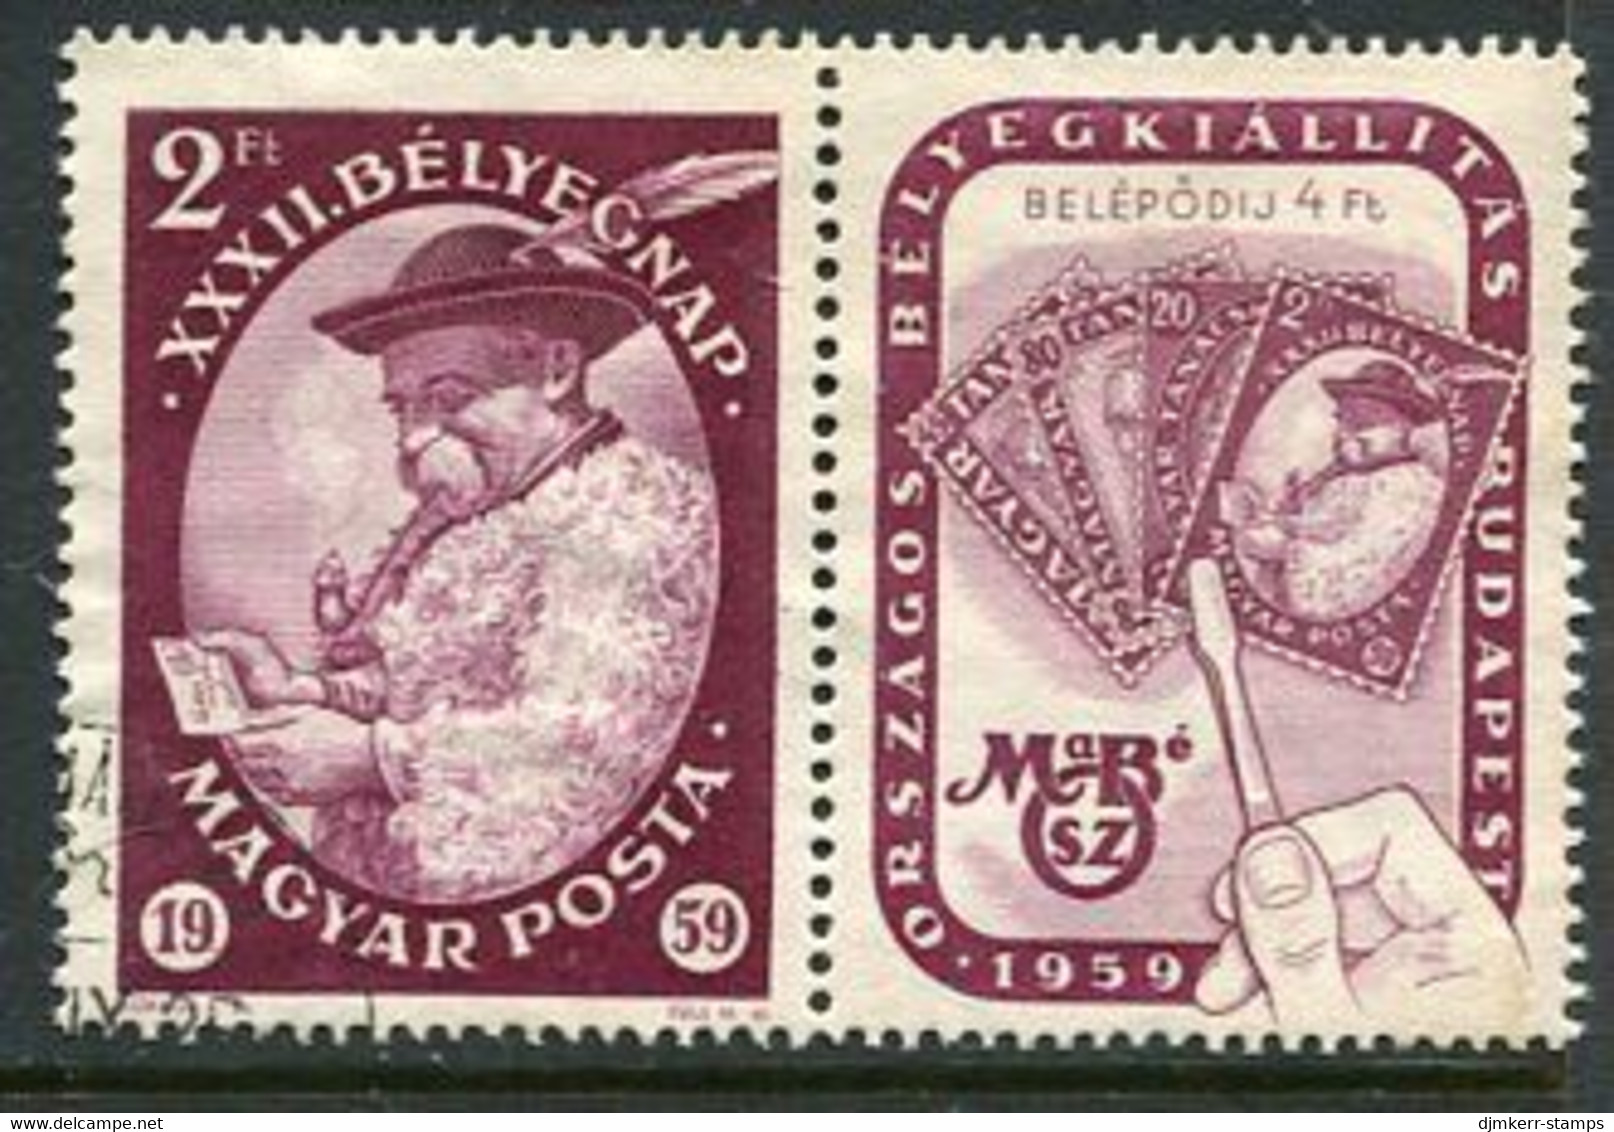 HUNGARY 1959 Stamp Day Used.  Michel; 1627 - Usado